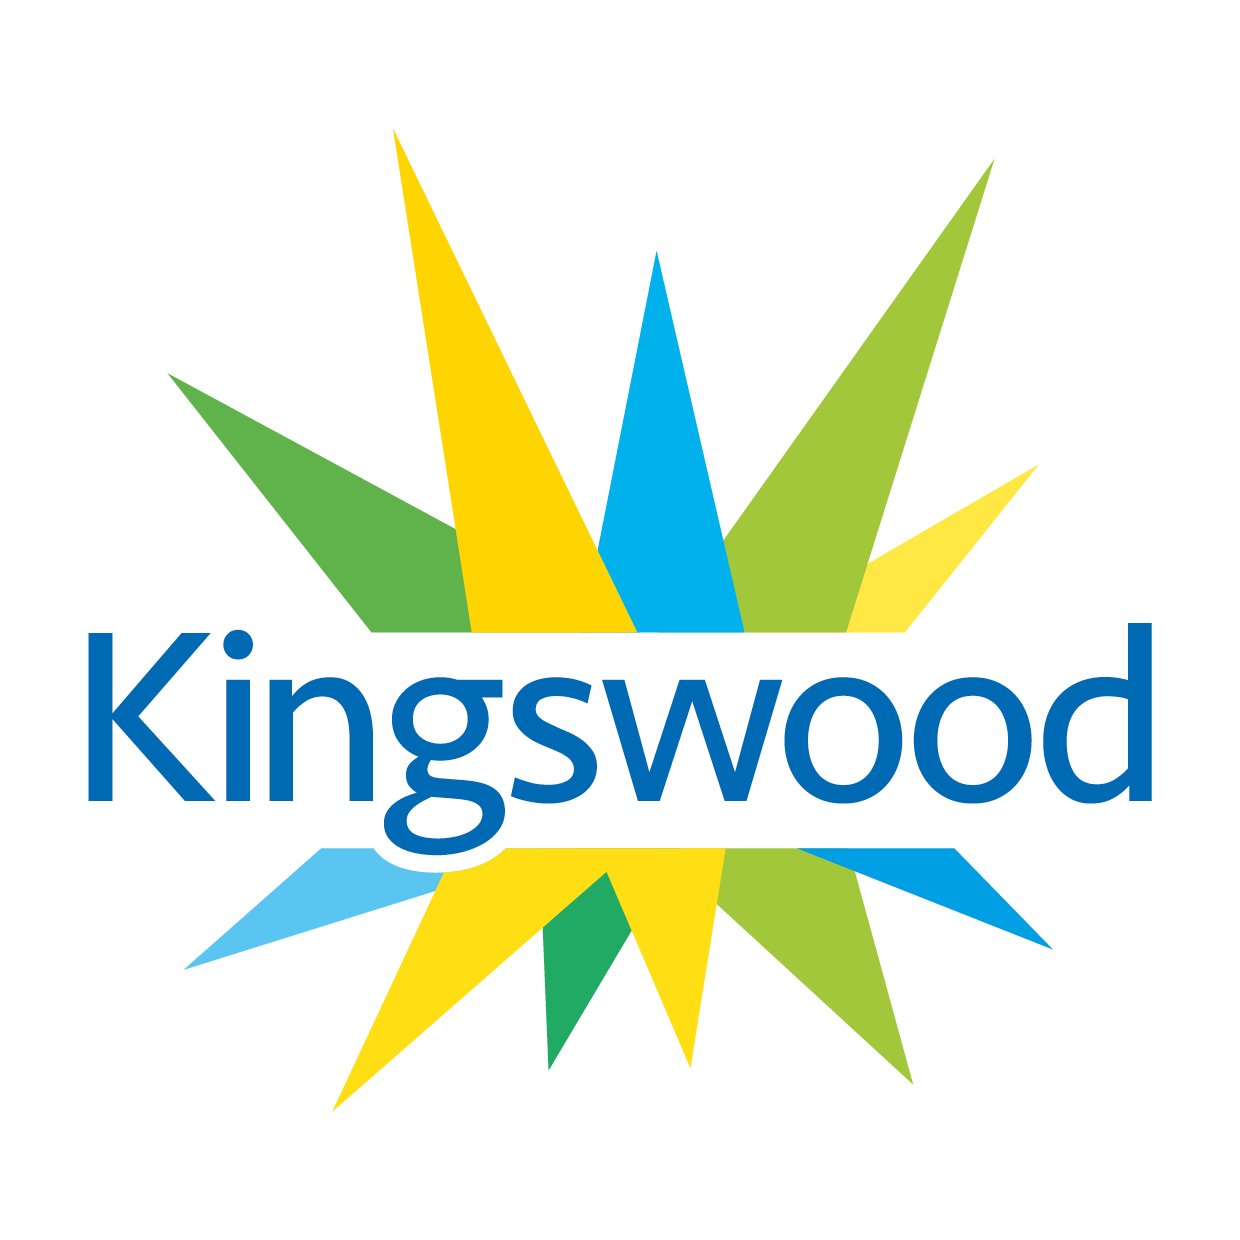 Kingswood - Logo Square.jpeg